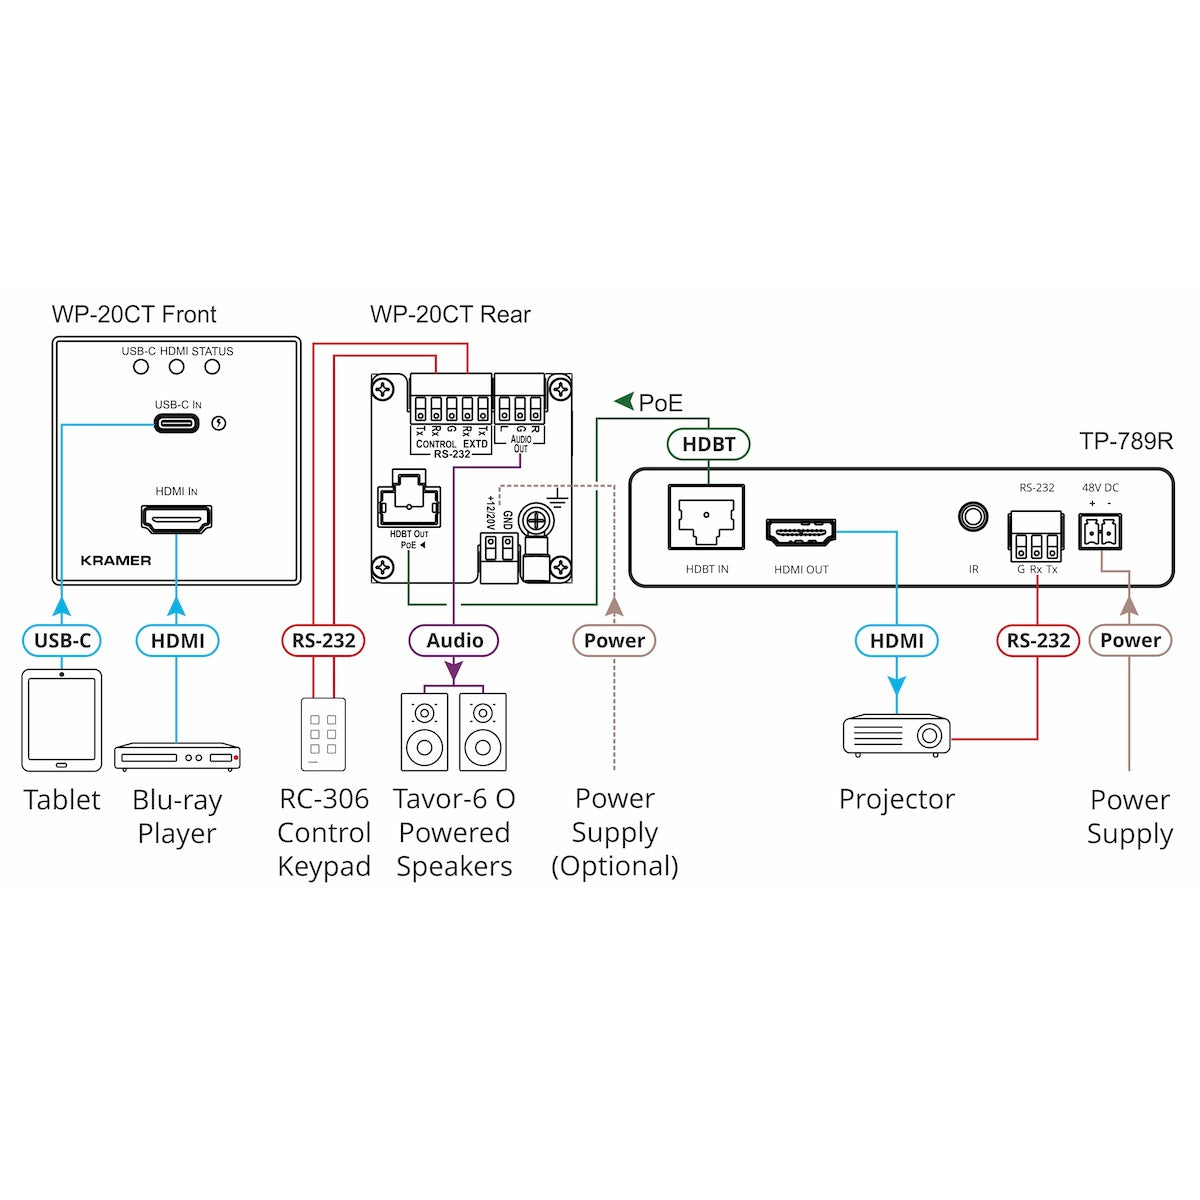 Kramer WP-20CT 4K HDMI/USB-C Wall-Plate Switcher/Transmitter over HDBaseT, diagram